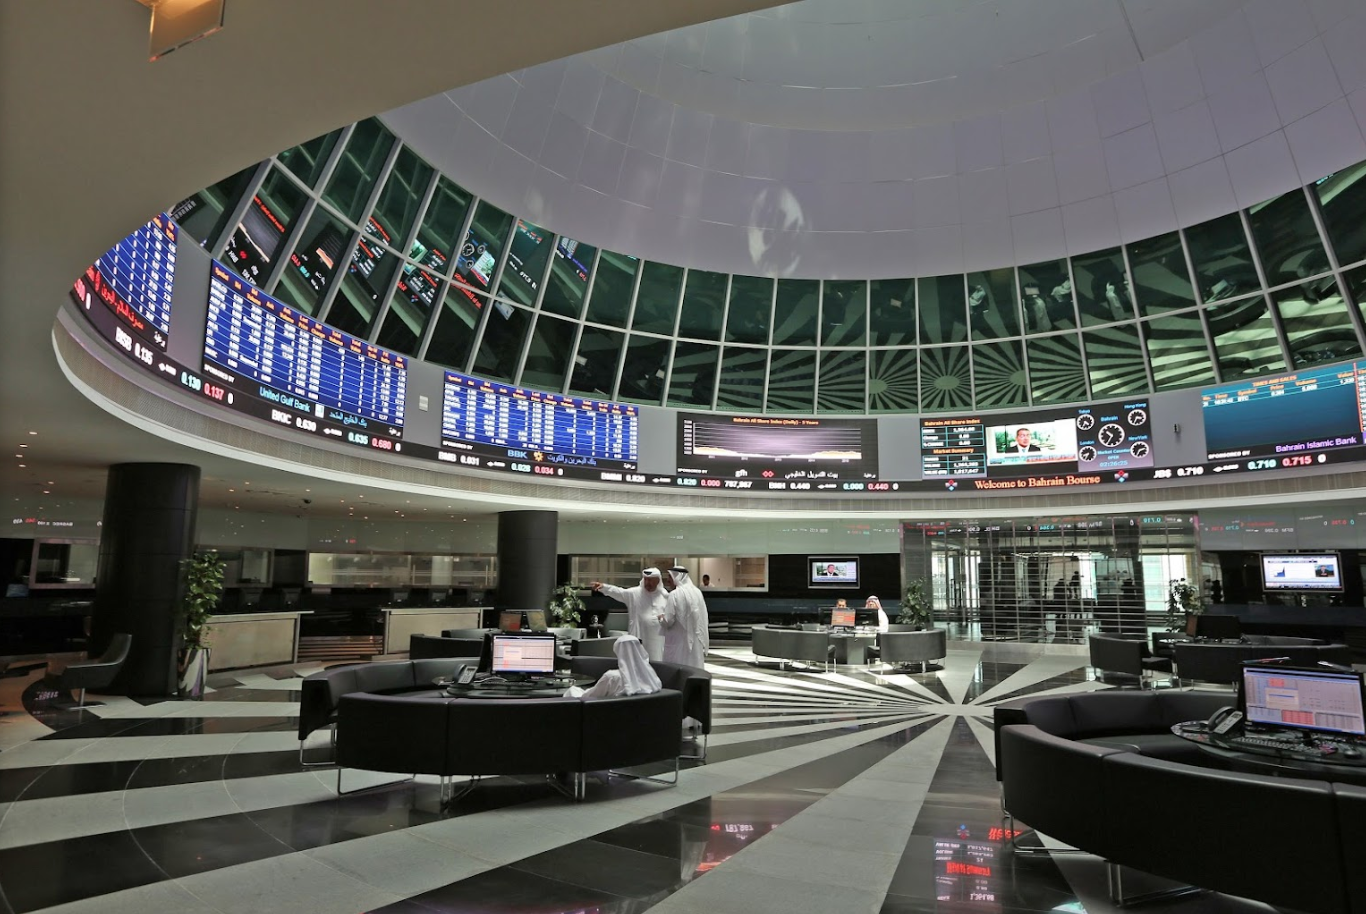 Bahrain Bourse INJAZ Smart Investor Program